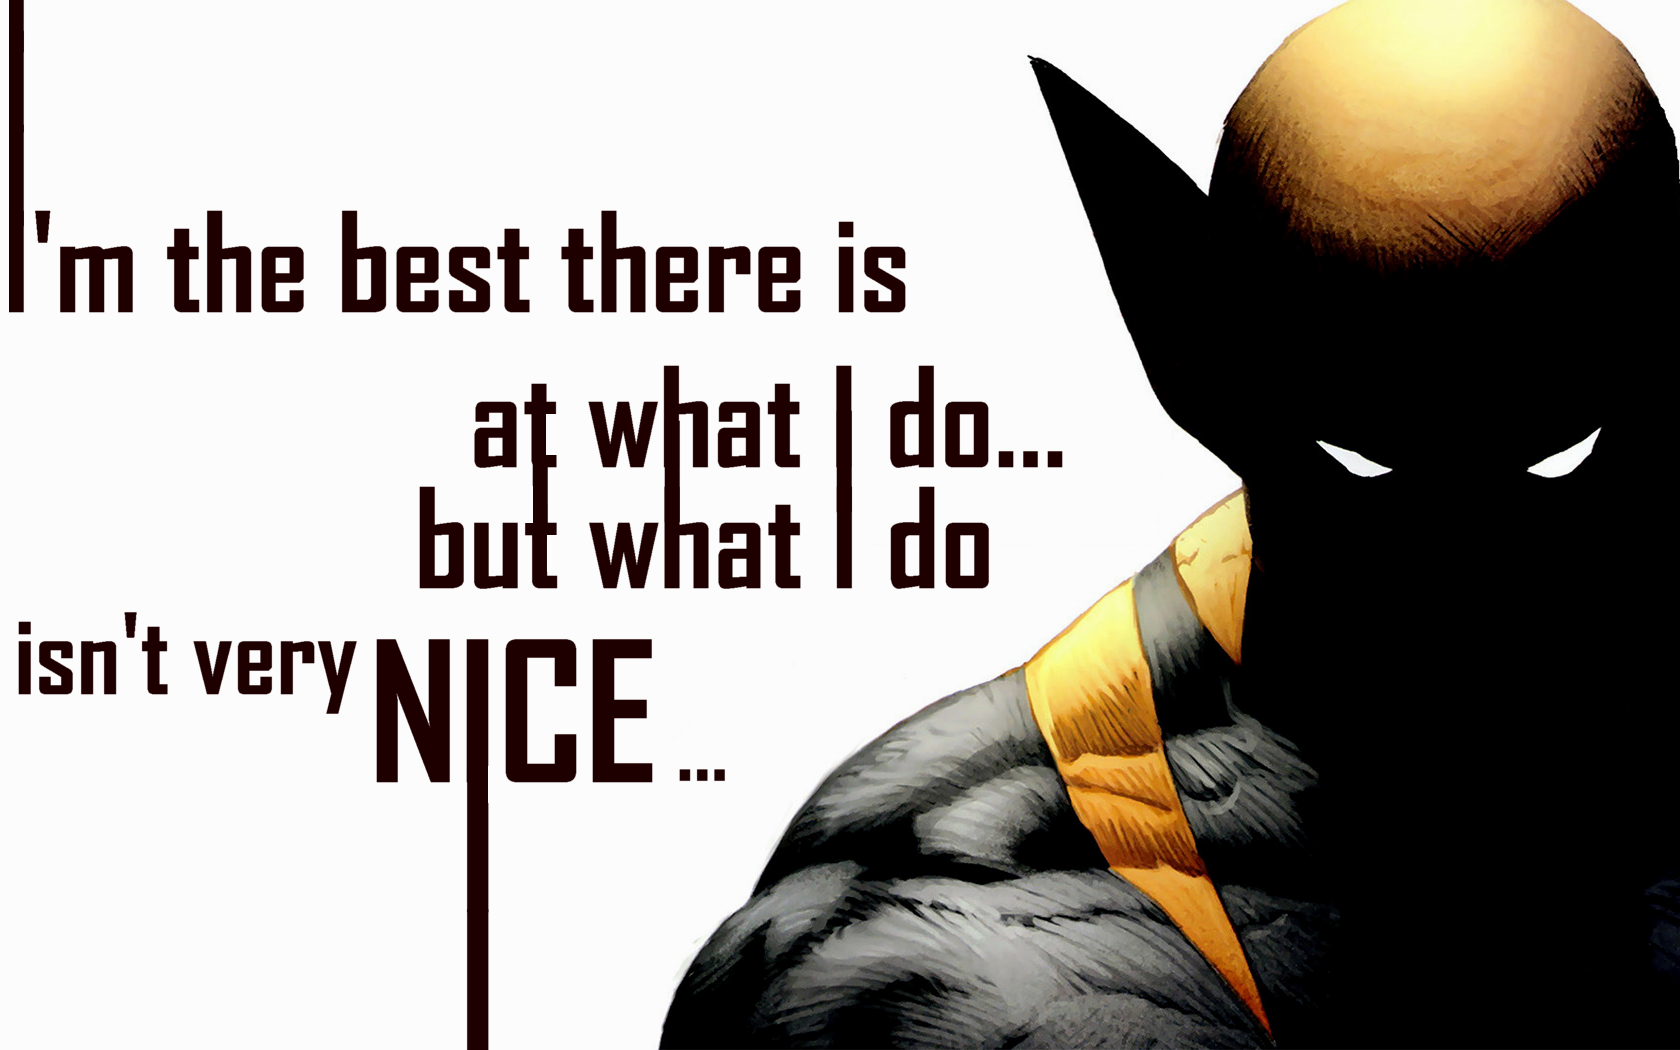 Comics Wolverine Fondo de pantalla HD | Fondo de Escritorio